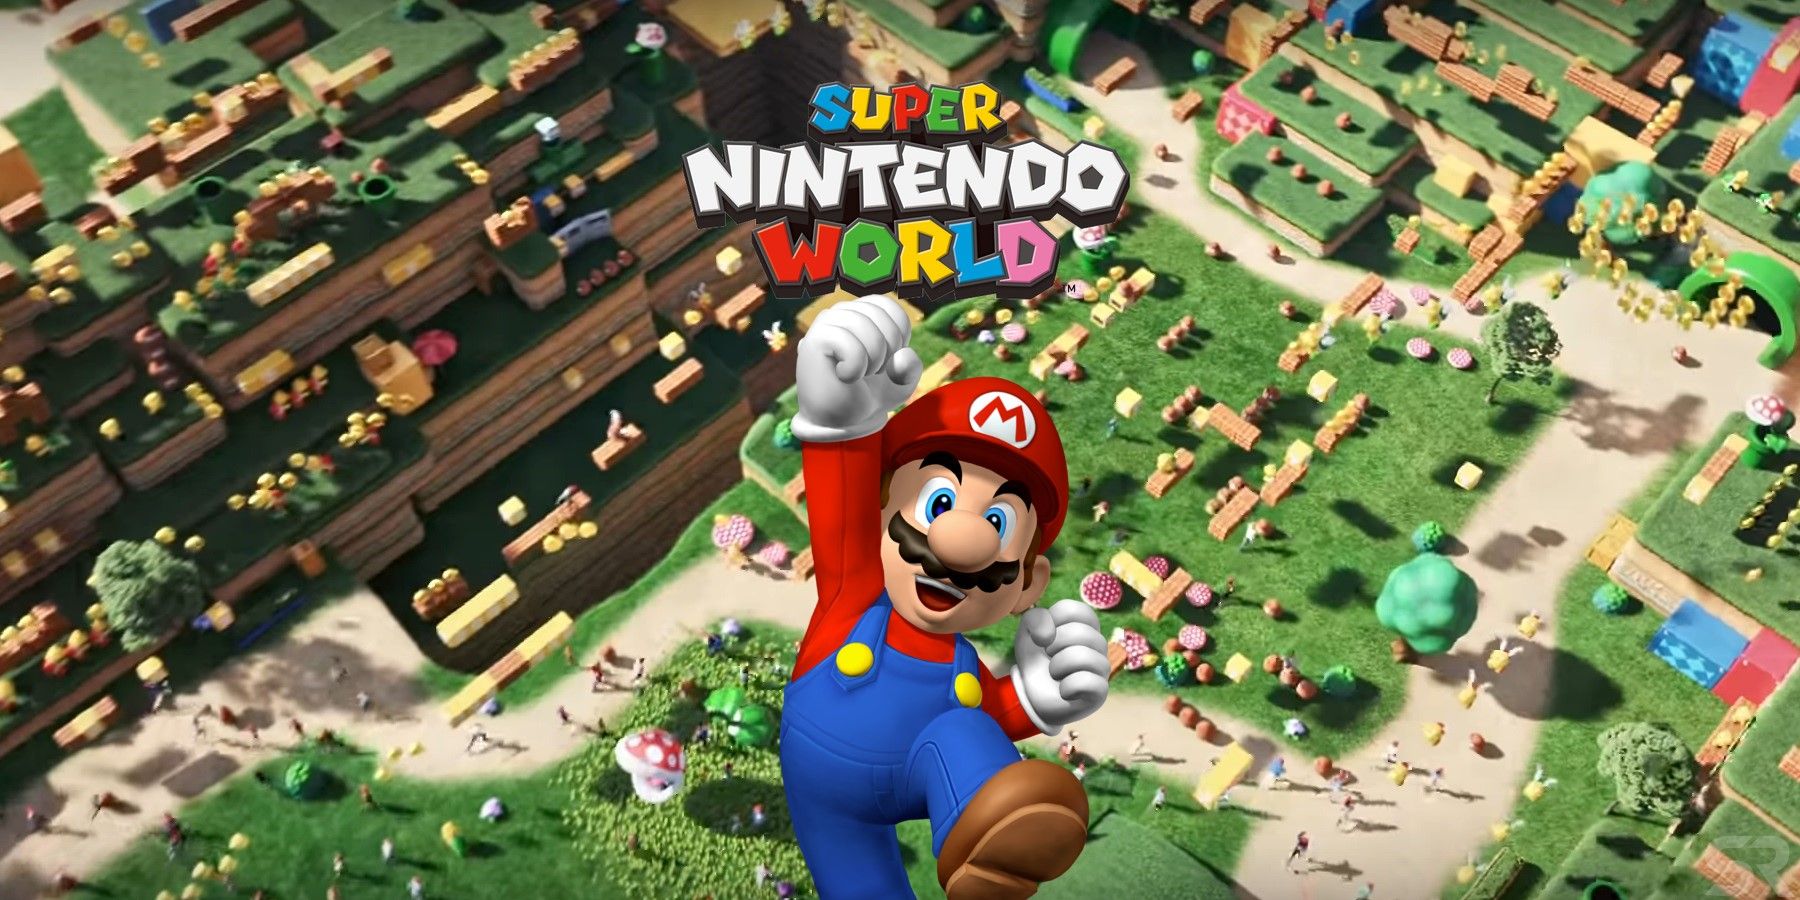 Universal announces details for Super Nintendo World